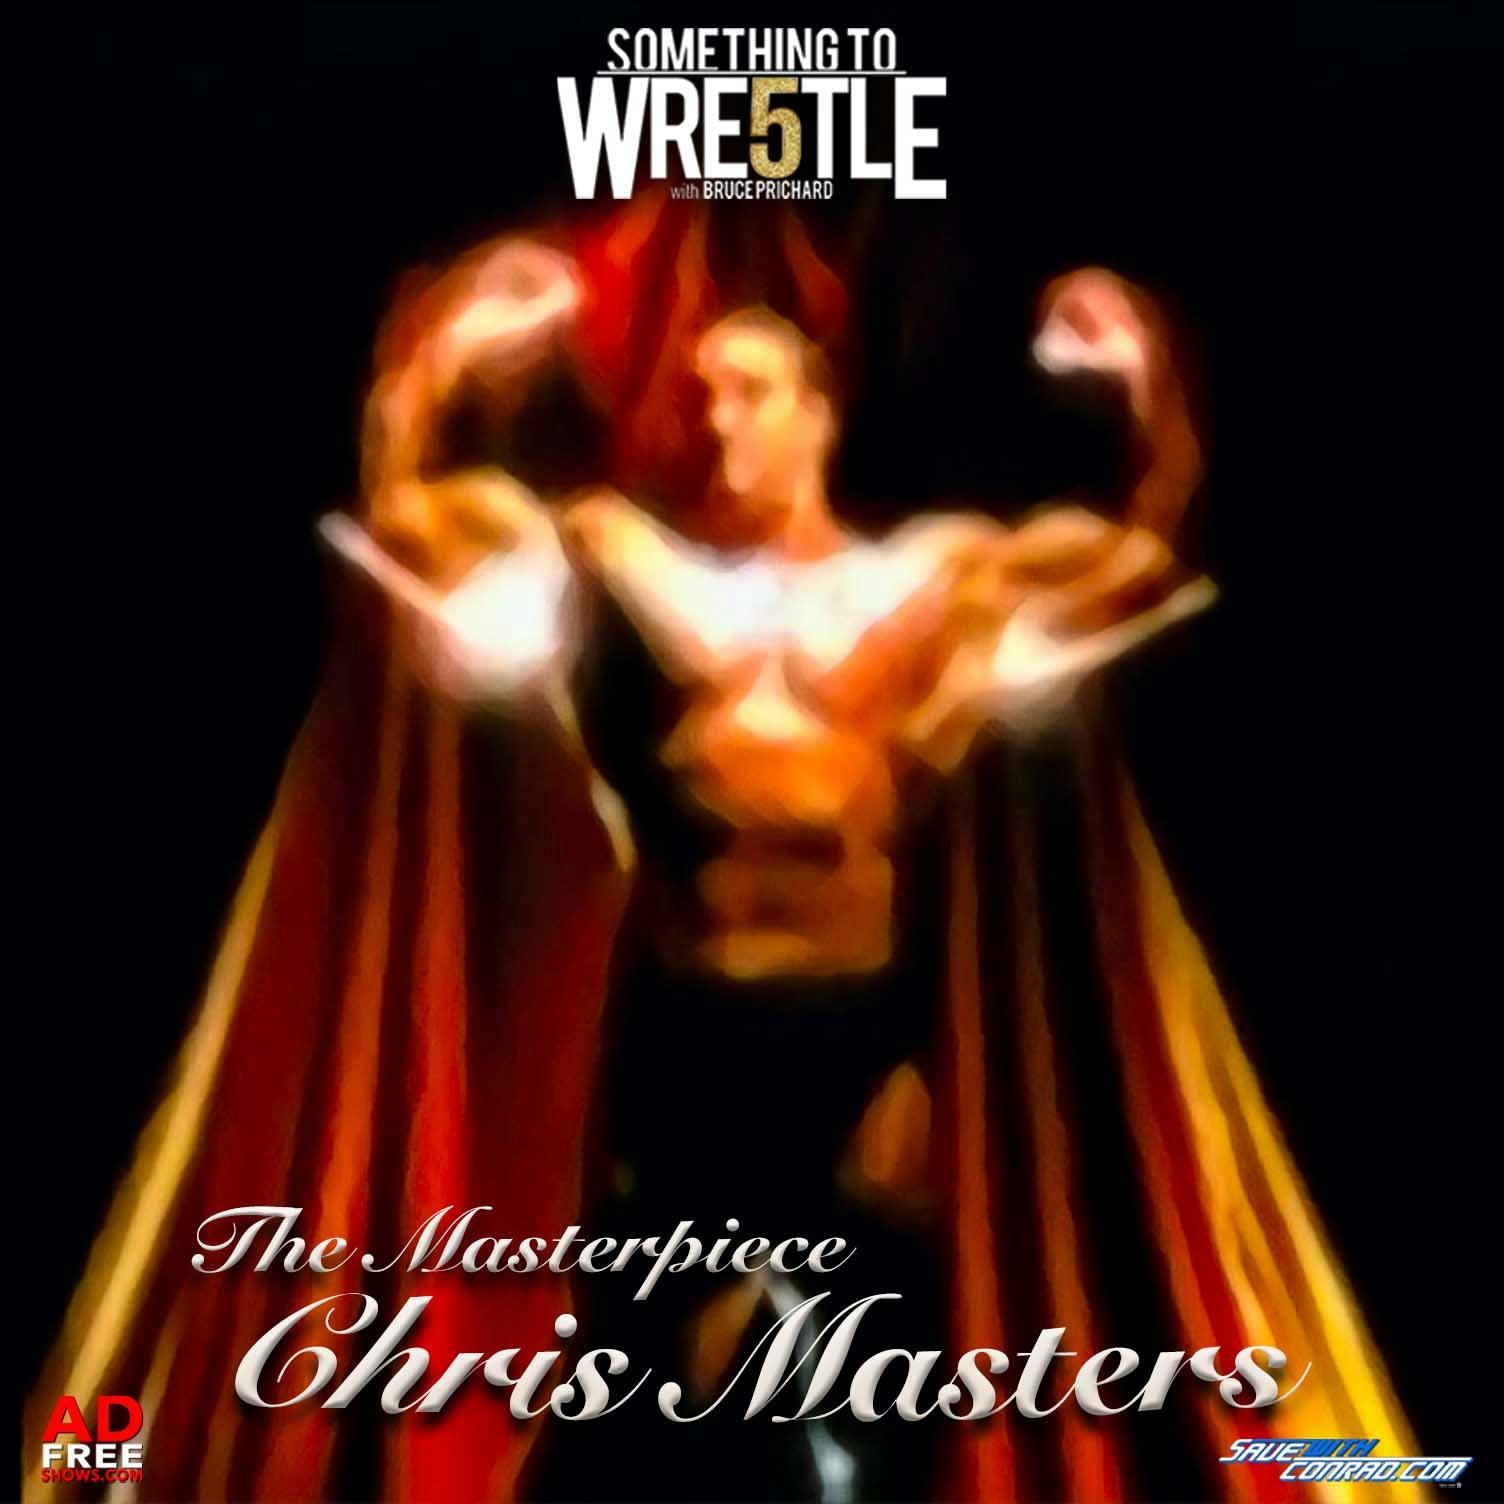 Episode 305: Chris Masters